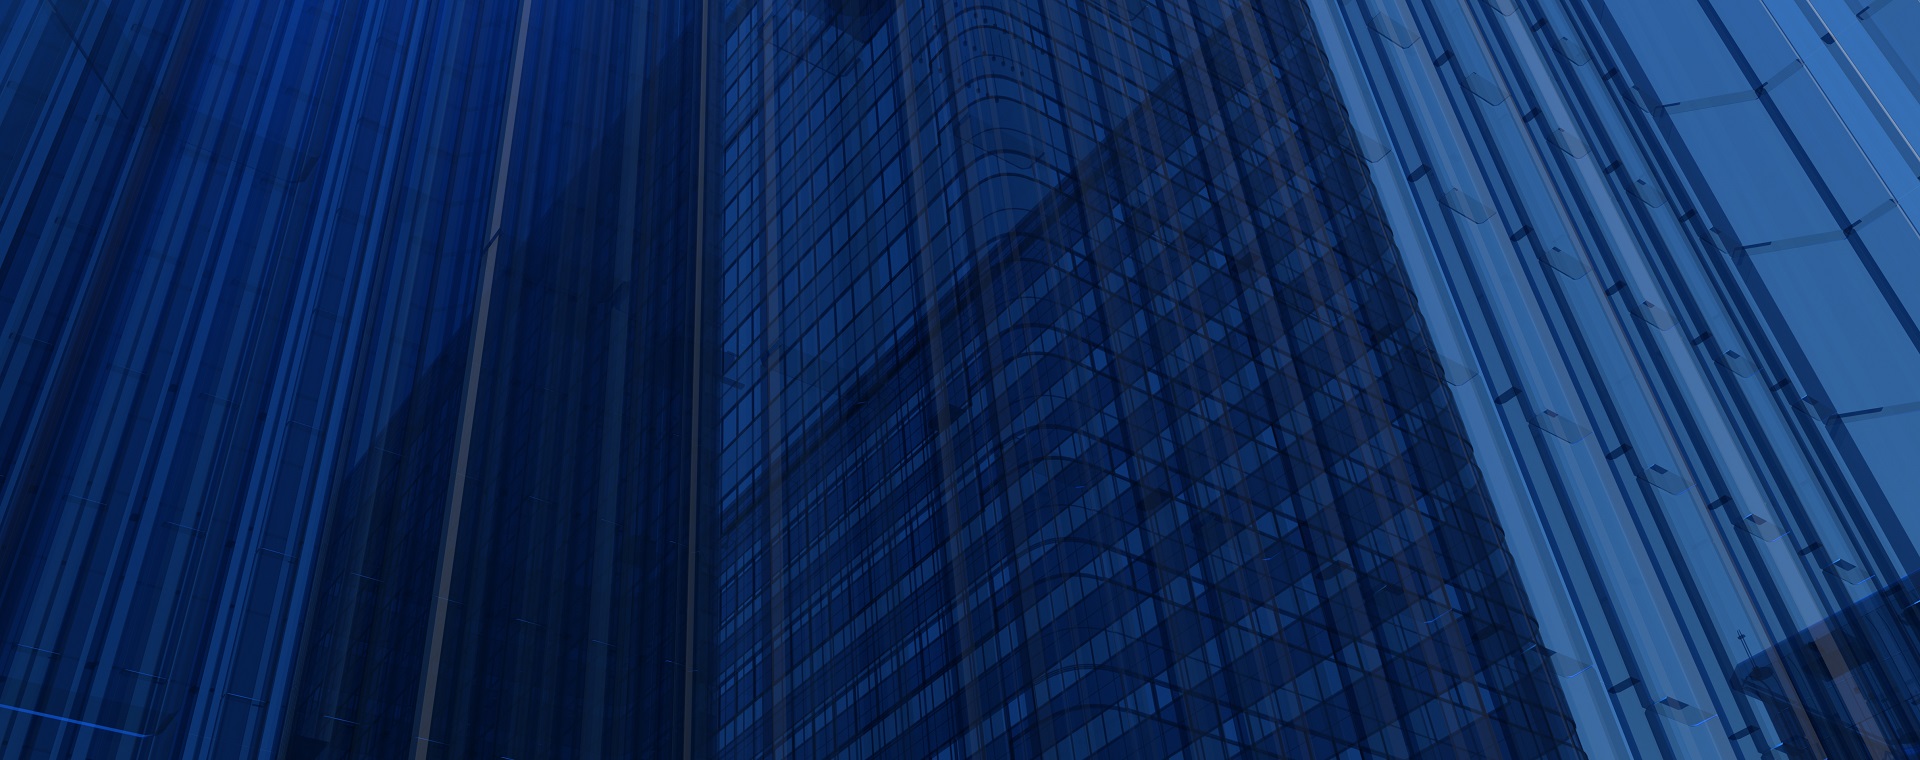 Reflective/transparent building against blue background